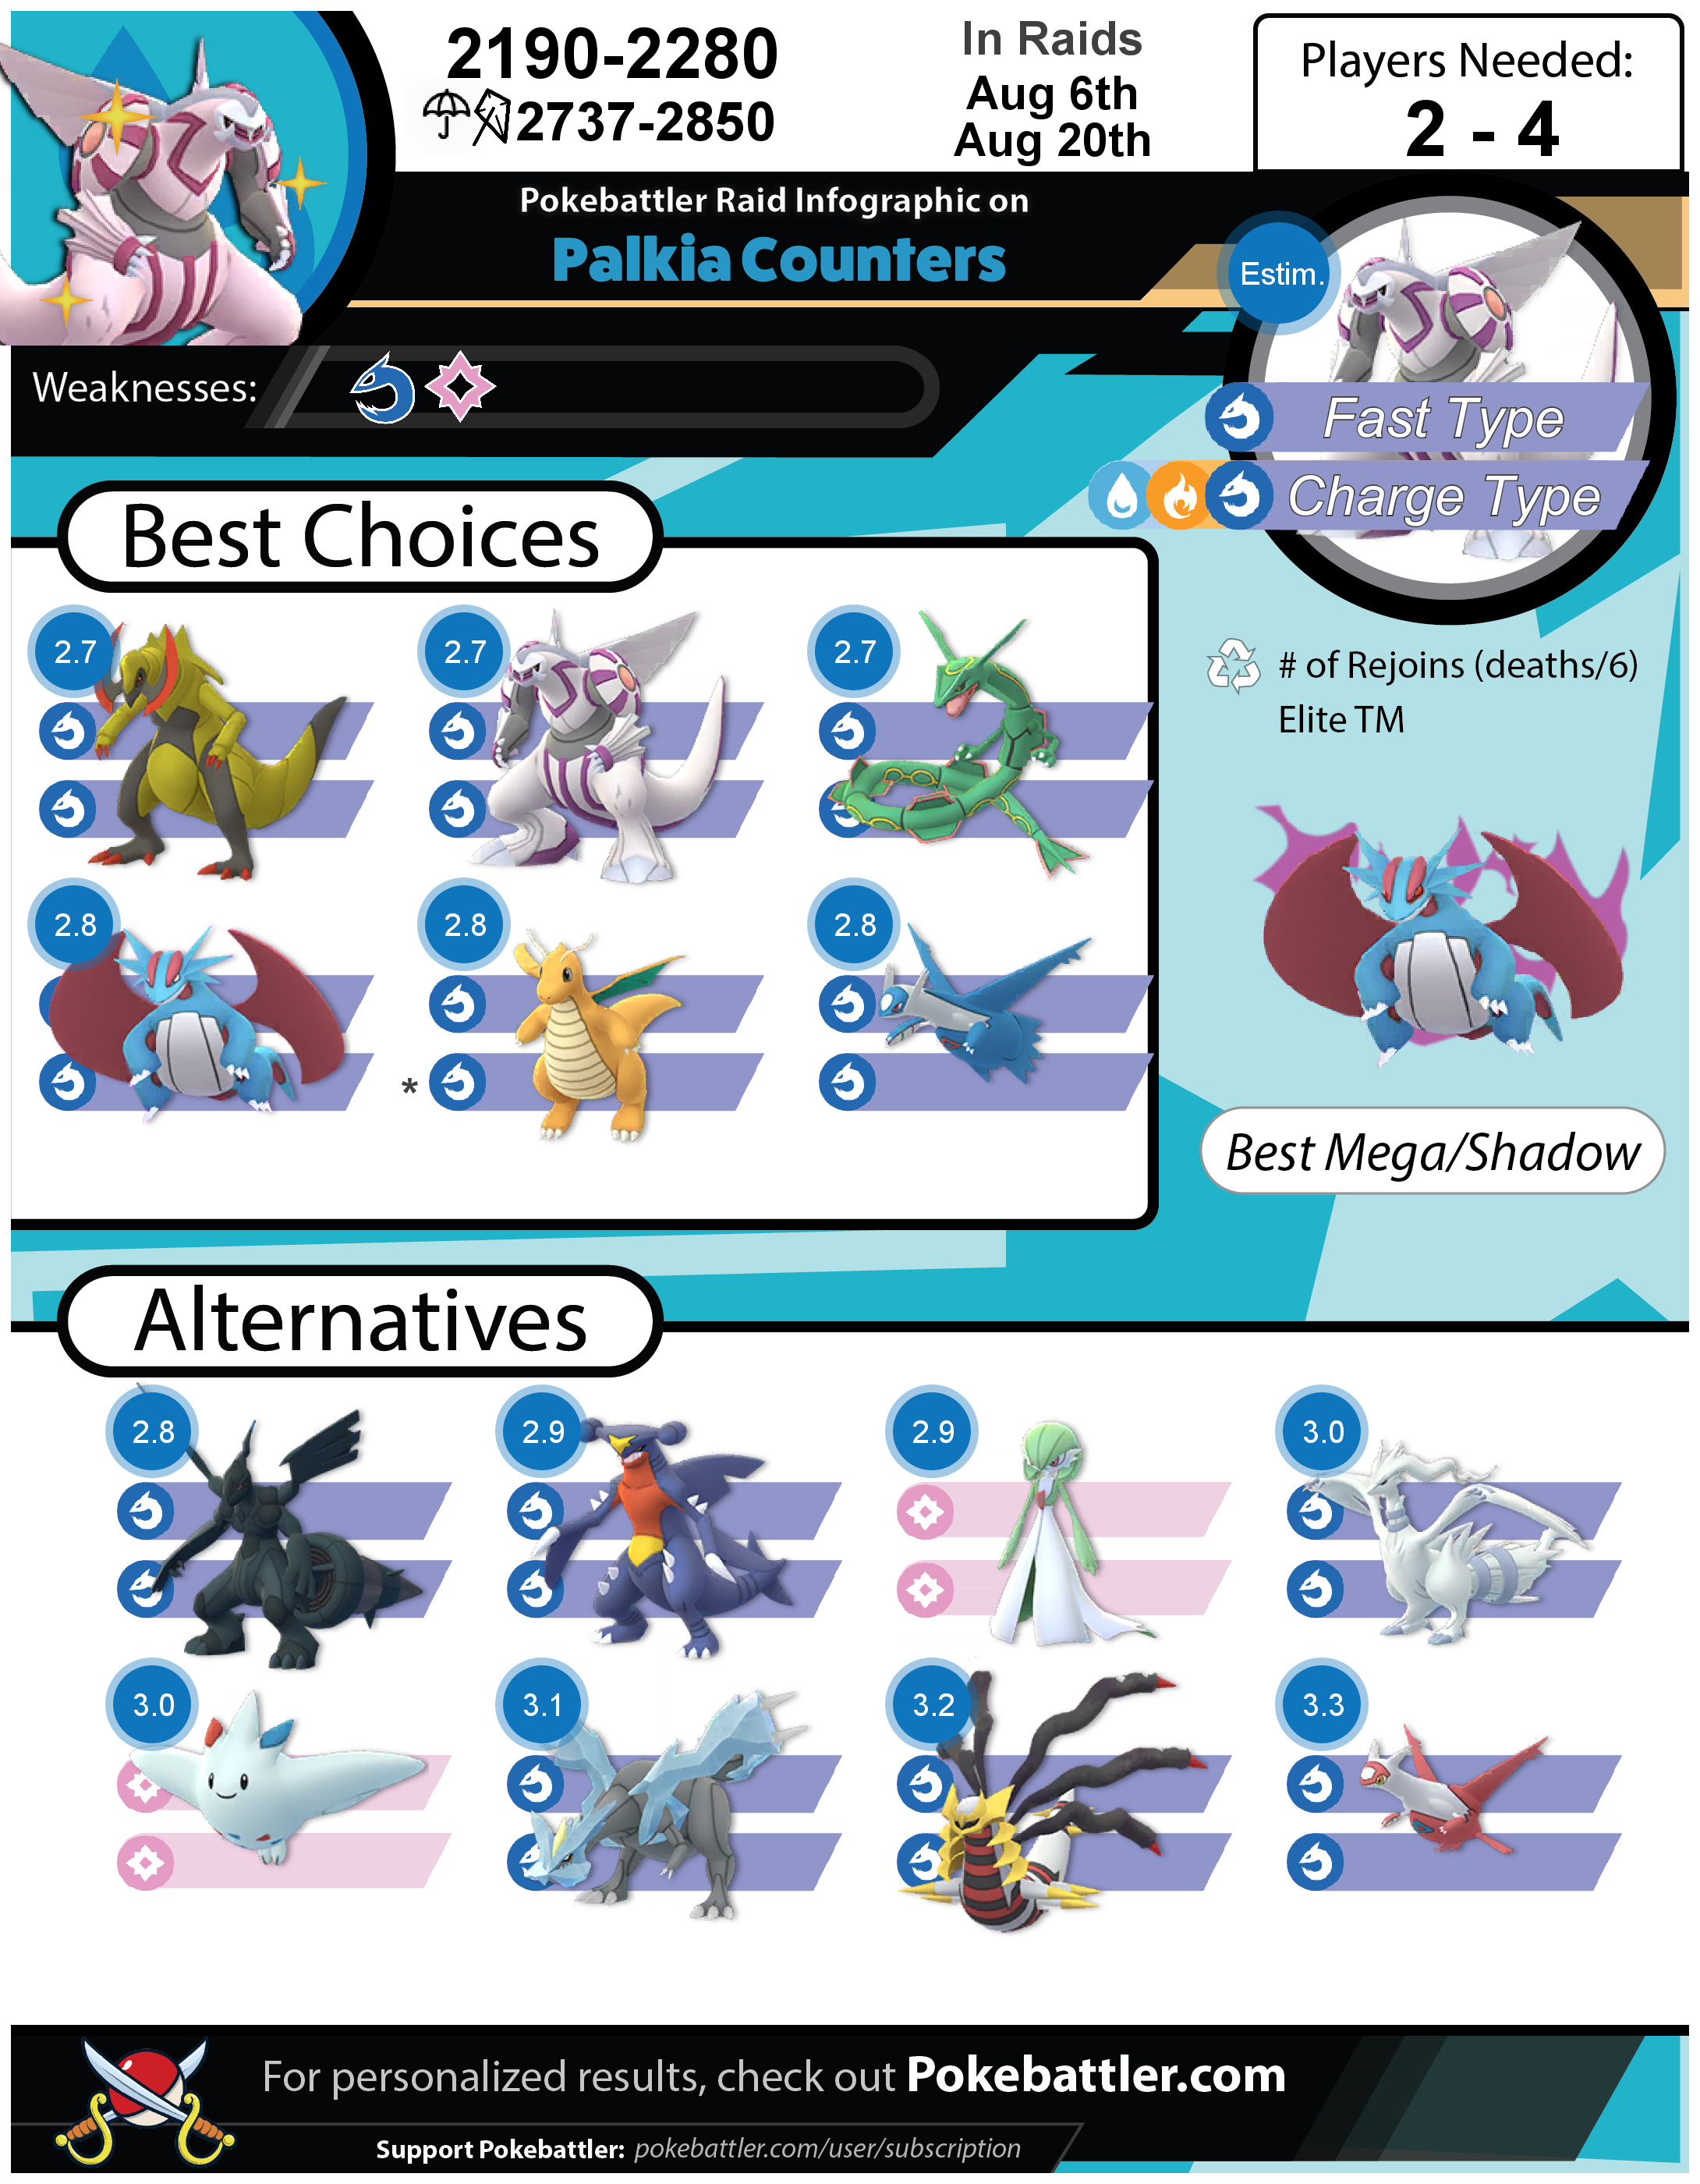 Pokémon GO: Palkia Five Star Raid Guide (Best Counters & Weaknesses)